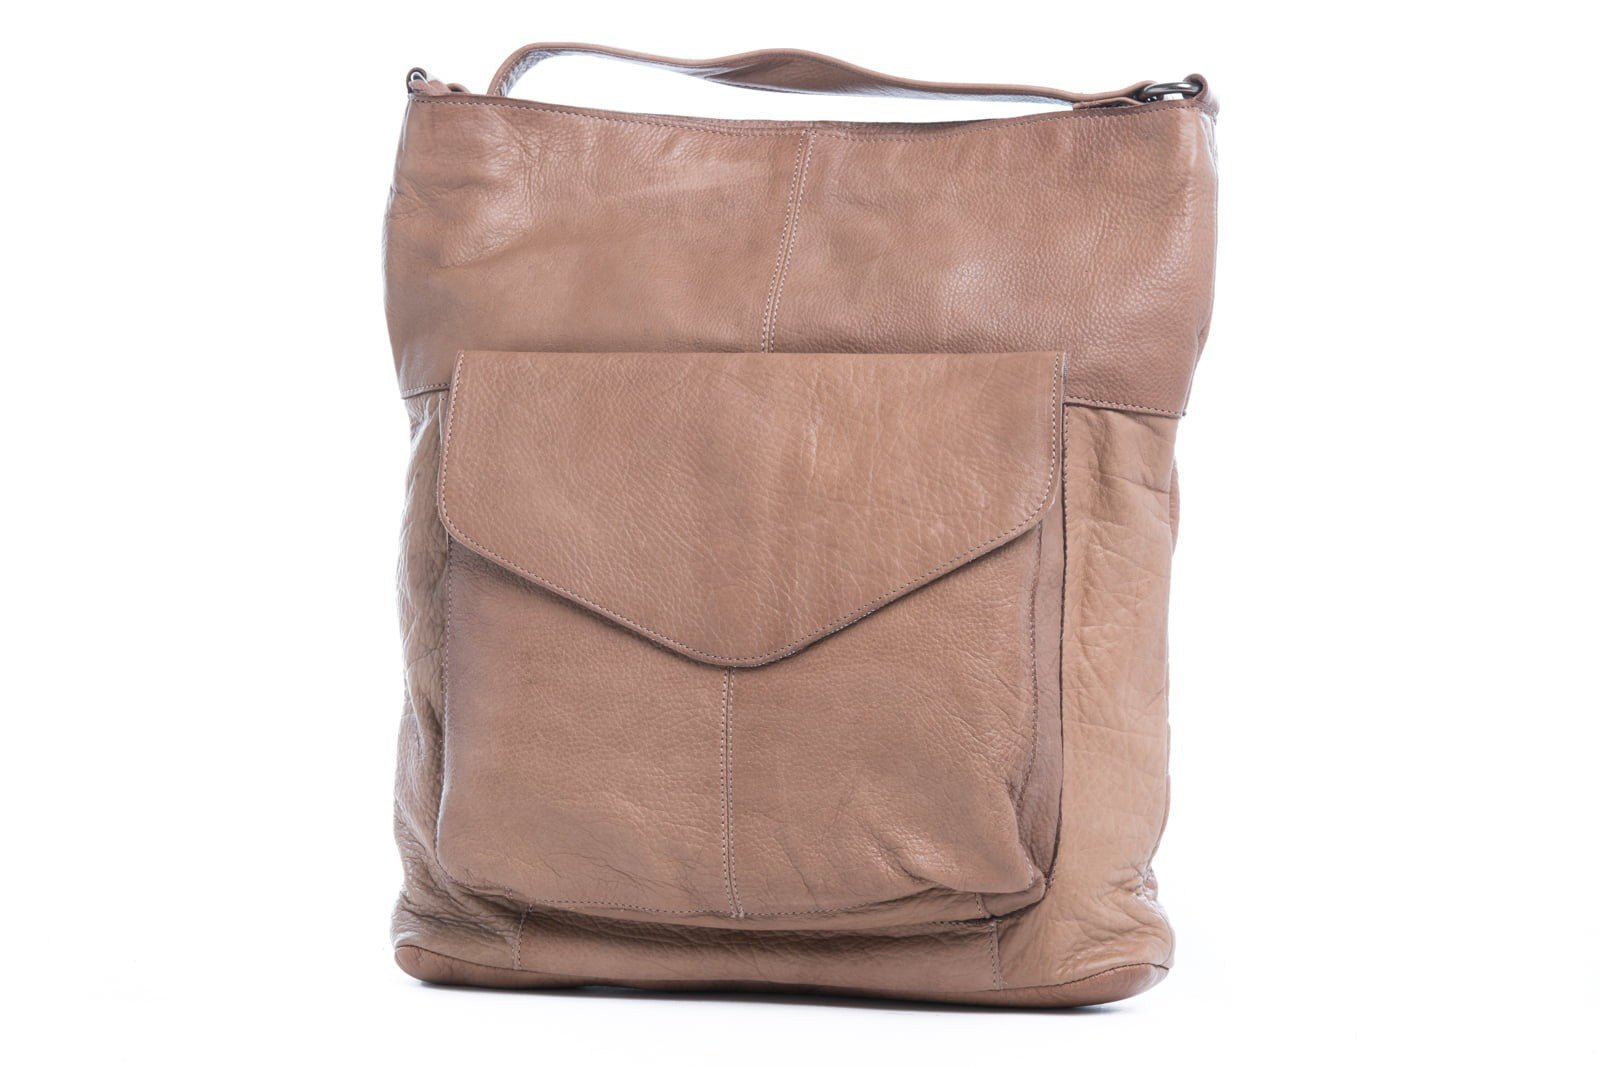 Oran By Rugged Hide Emily Leather Handbag [COLOUR:Black]